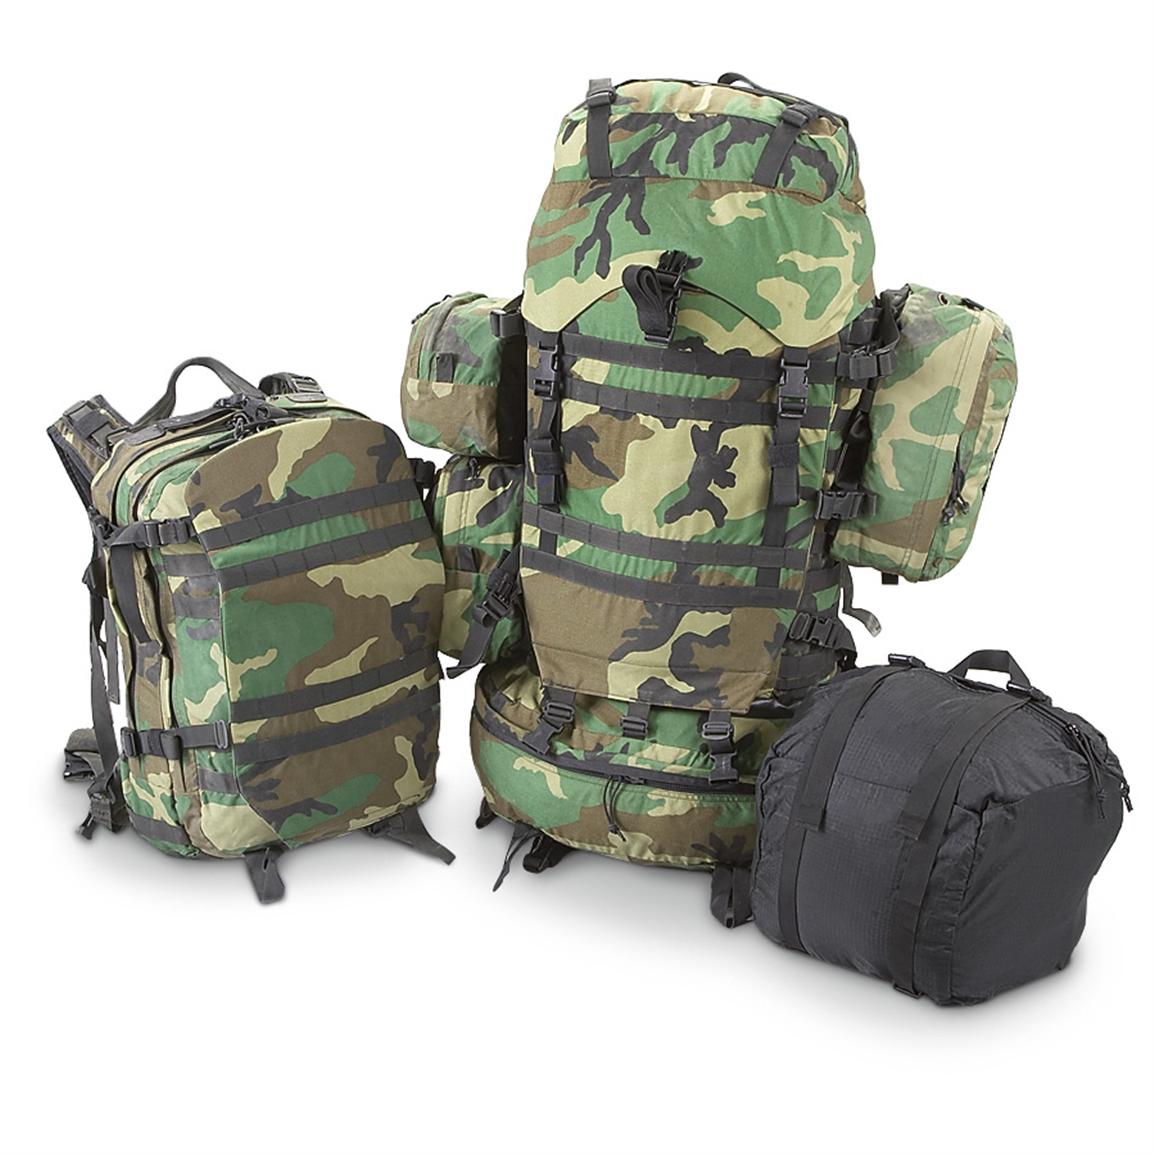 Used USMC Nylon Survival Backpack System, Woodland - 159573, Rucksacks & Backpacks at Sportsman ...